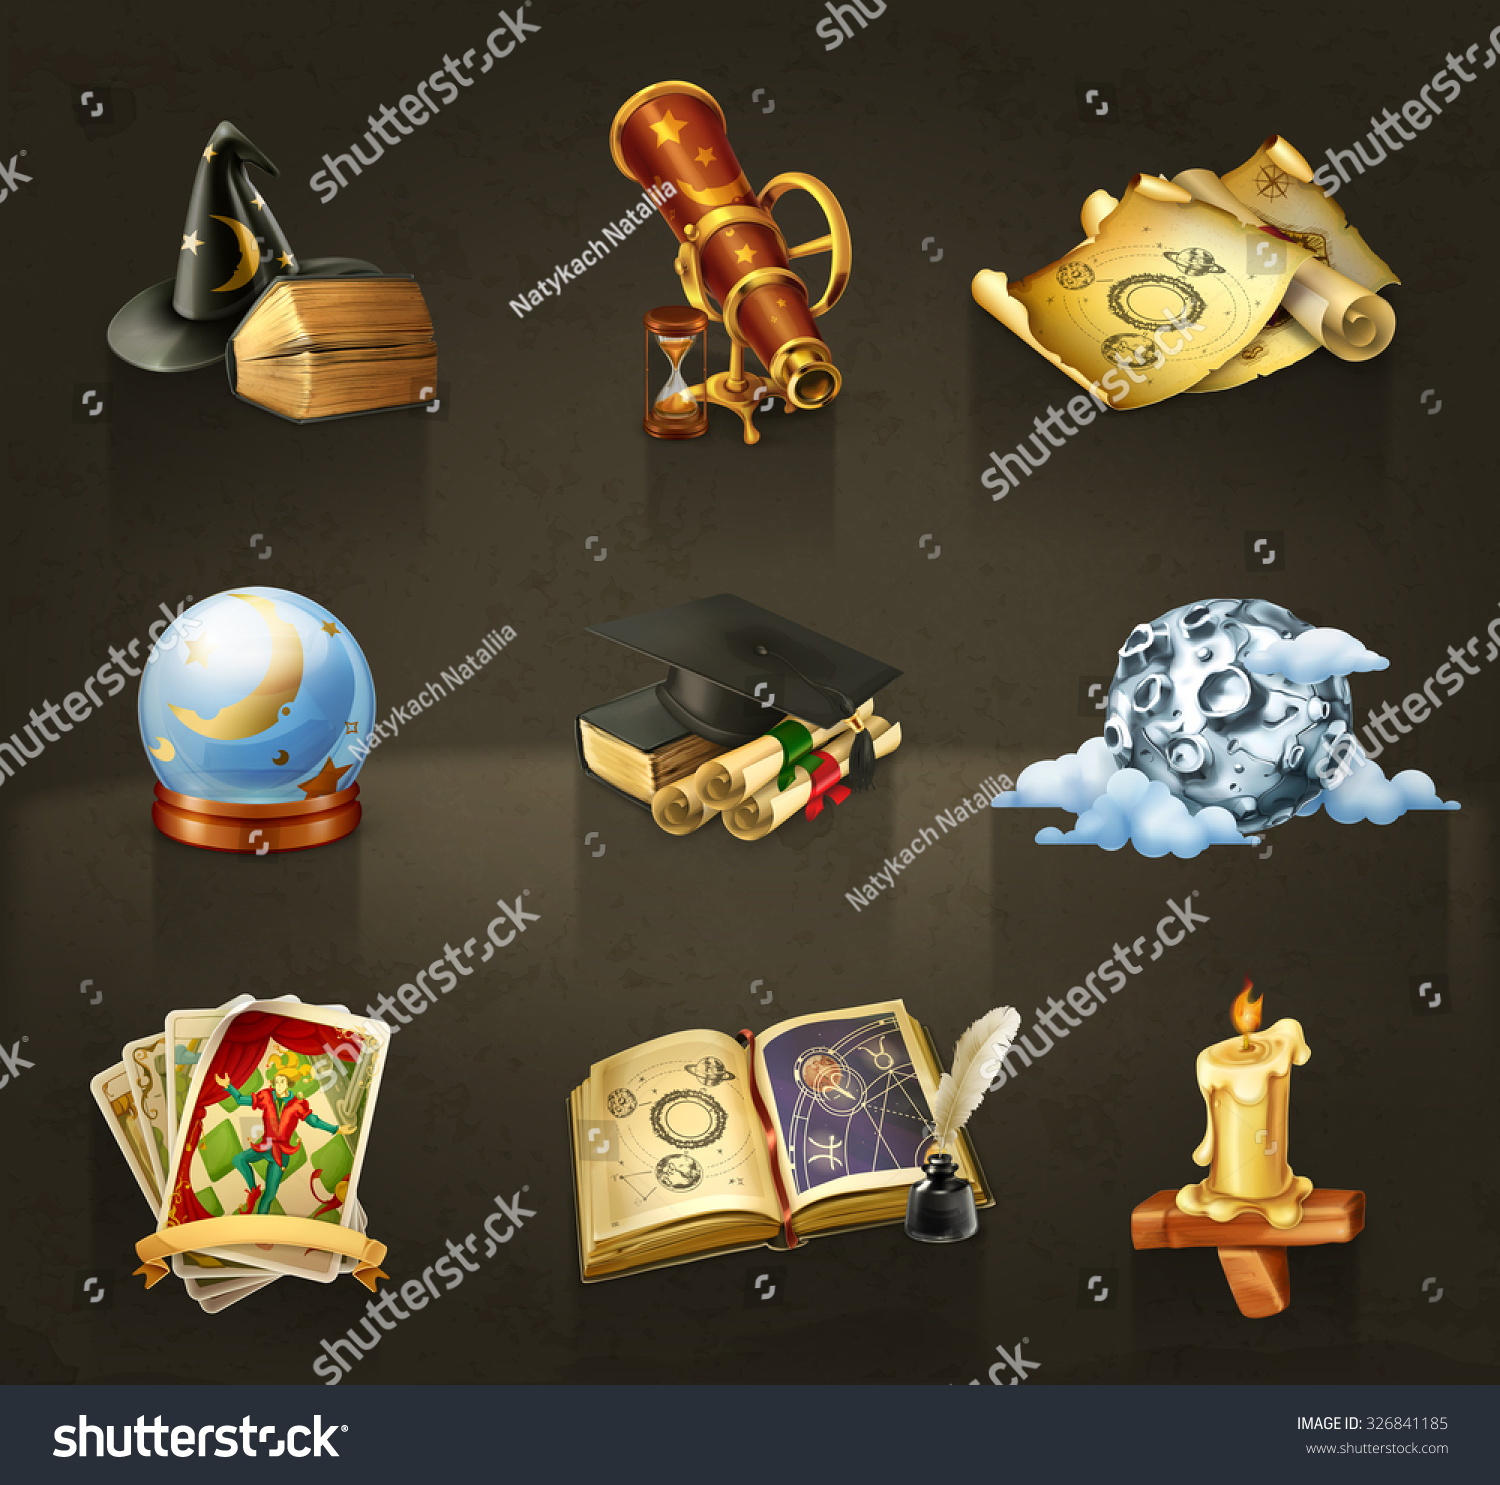 Astrology Set Vector Icons Dark Stock Vector 326841185 - Shutterstock